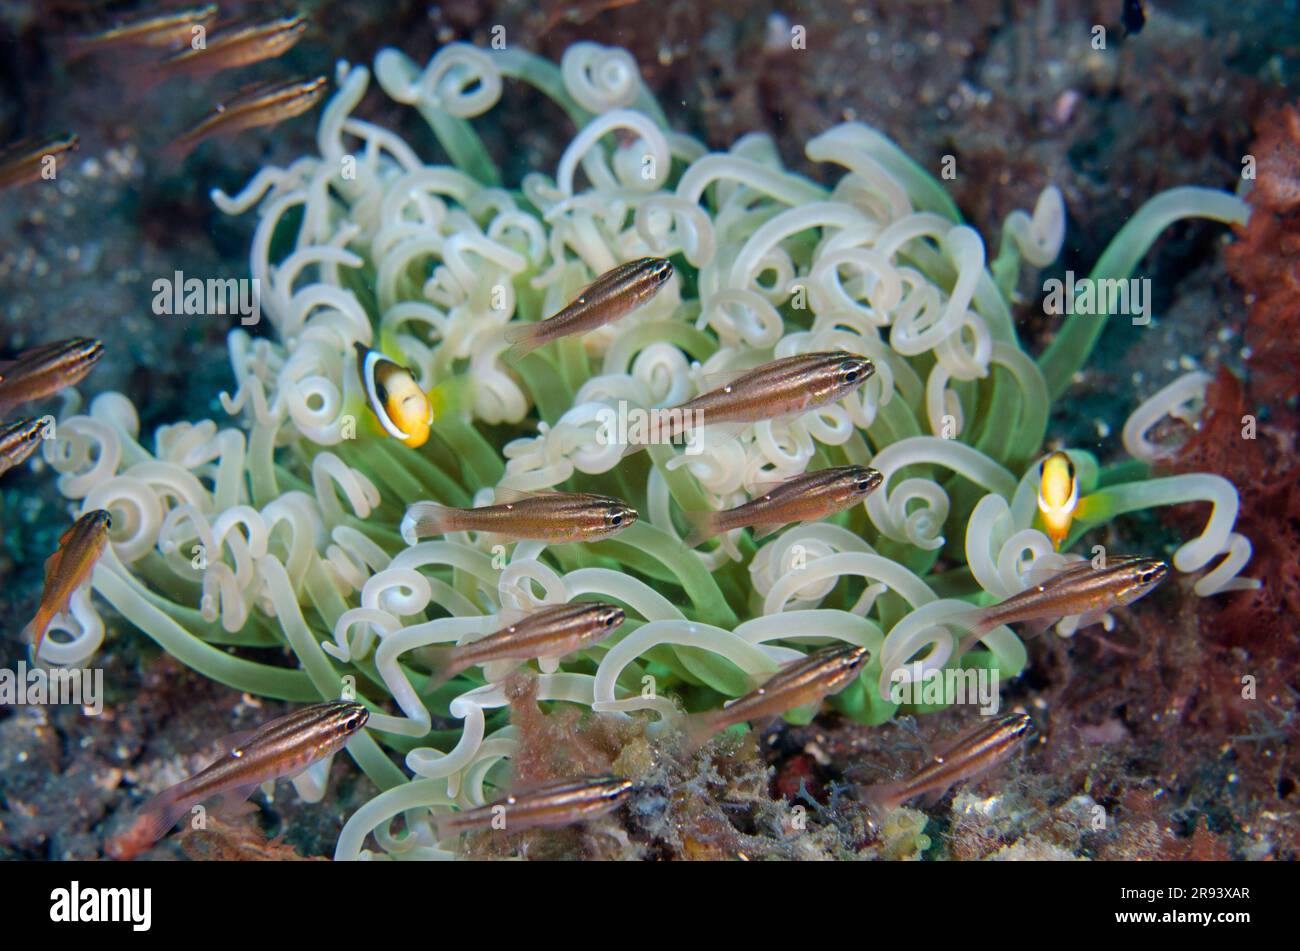 Pesce cardinale molucchino, Ostorhinchus moluccensis, con Anemonefish, Amphiprion sp, in tentacoli di Anemone lungo tentacolare, Heteractis doreensis, Batu Foto Stock